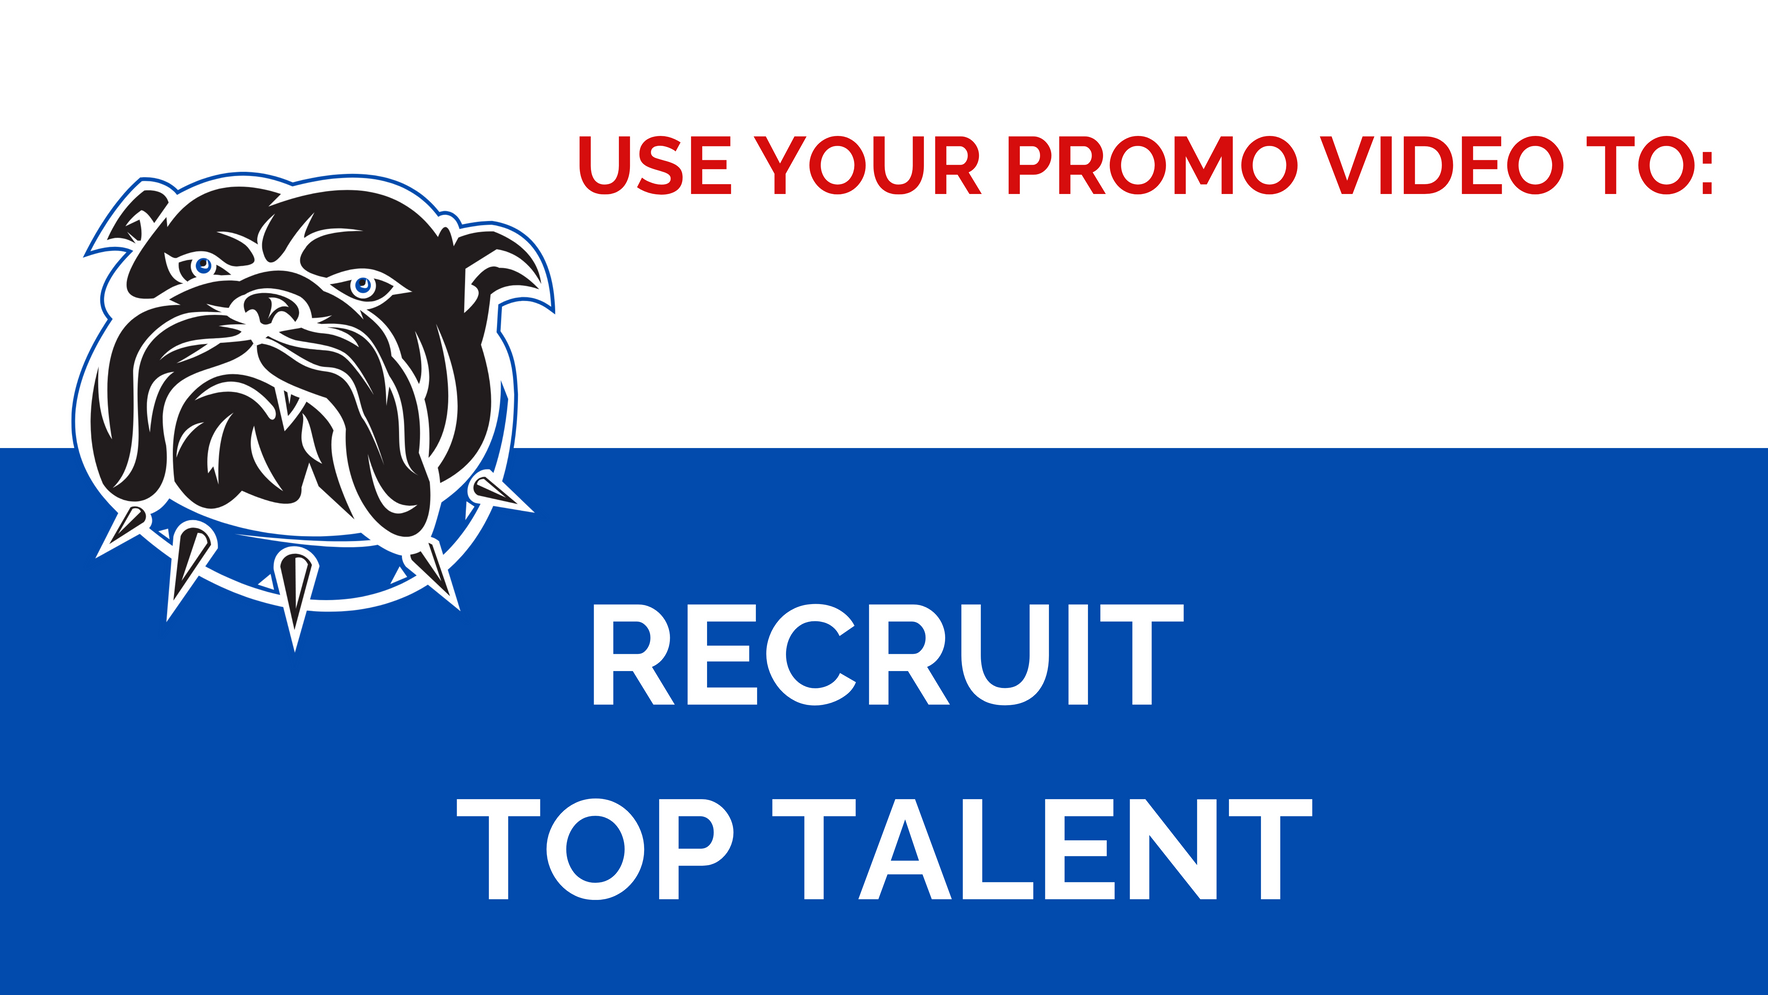 Recruit Top Talent